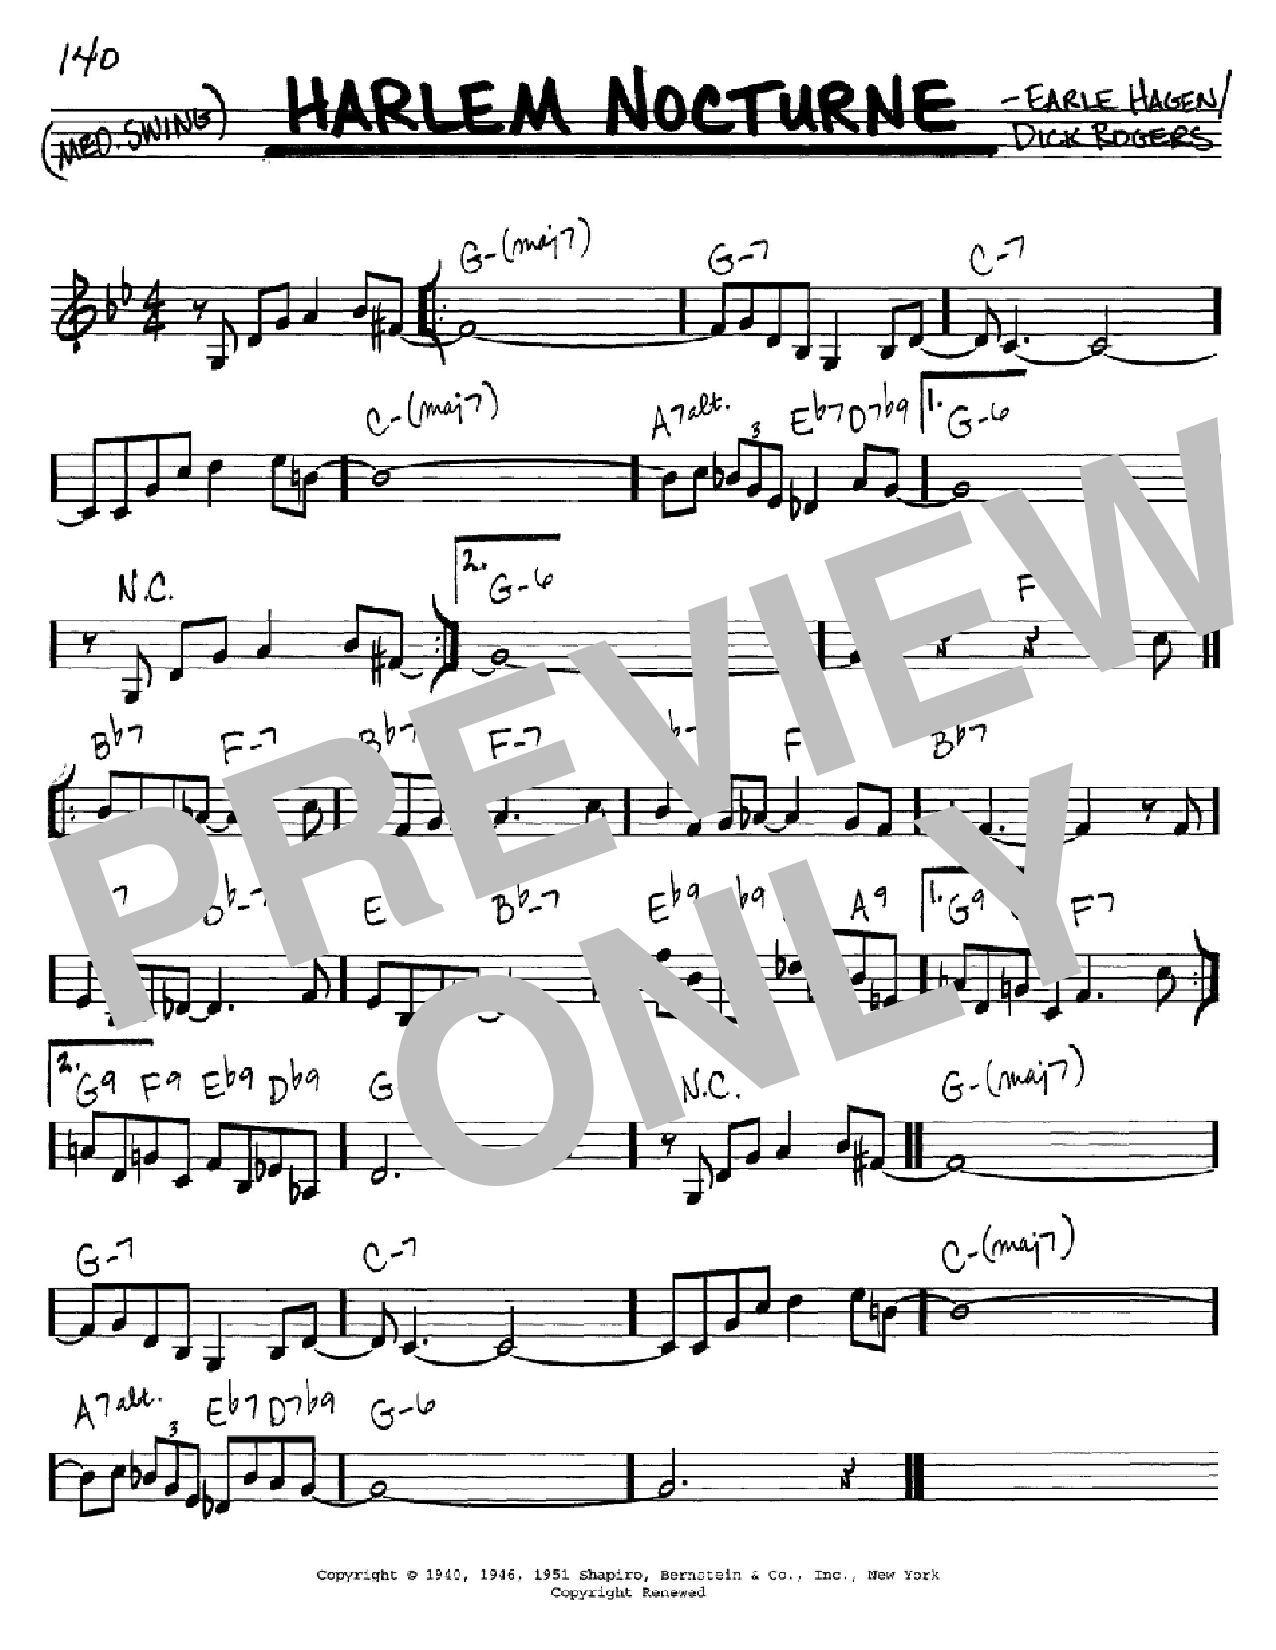 Earle Hagen Harlem Nocturne Sheet Music Notes & Chords for Vibraphone Solo - Download or Print PDF